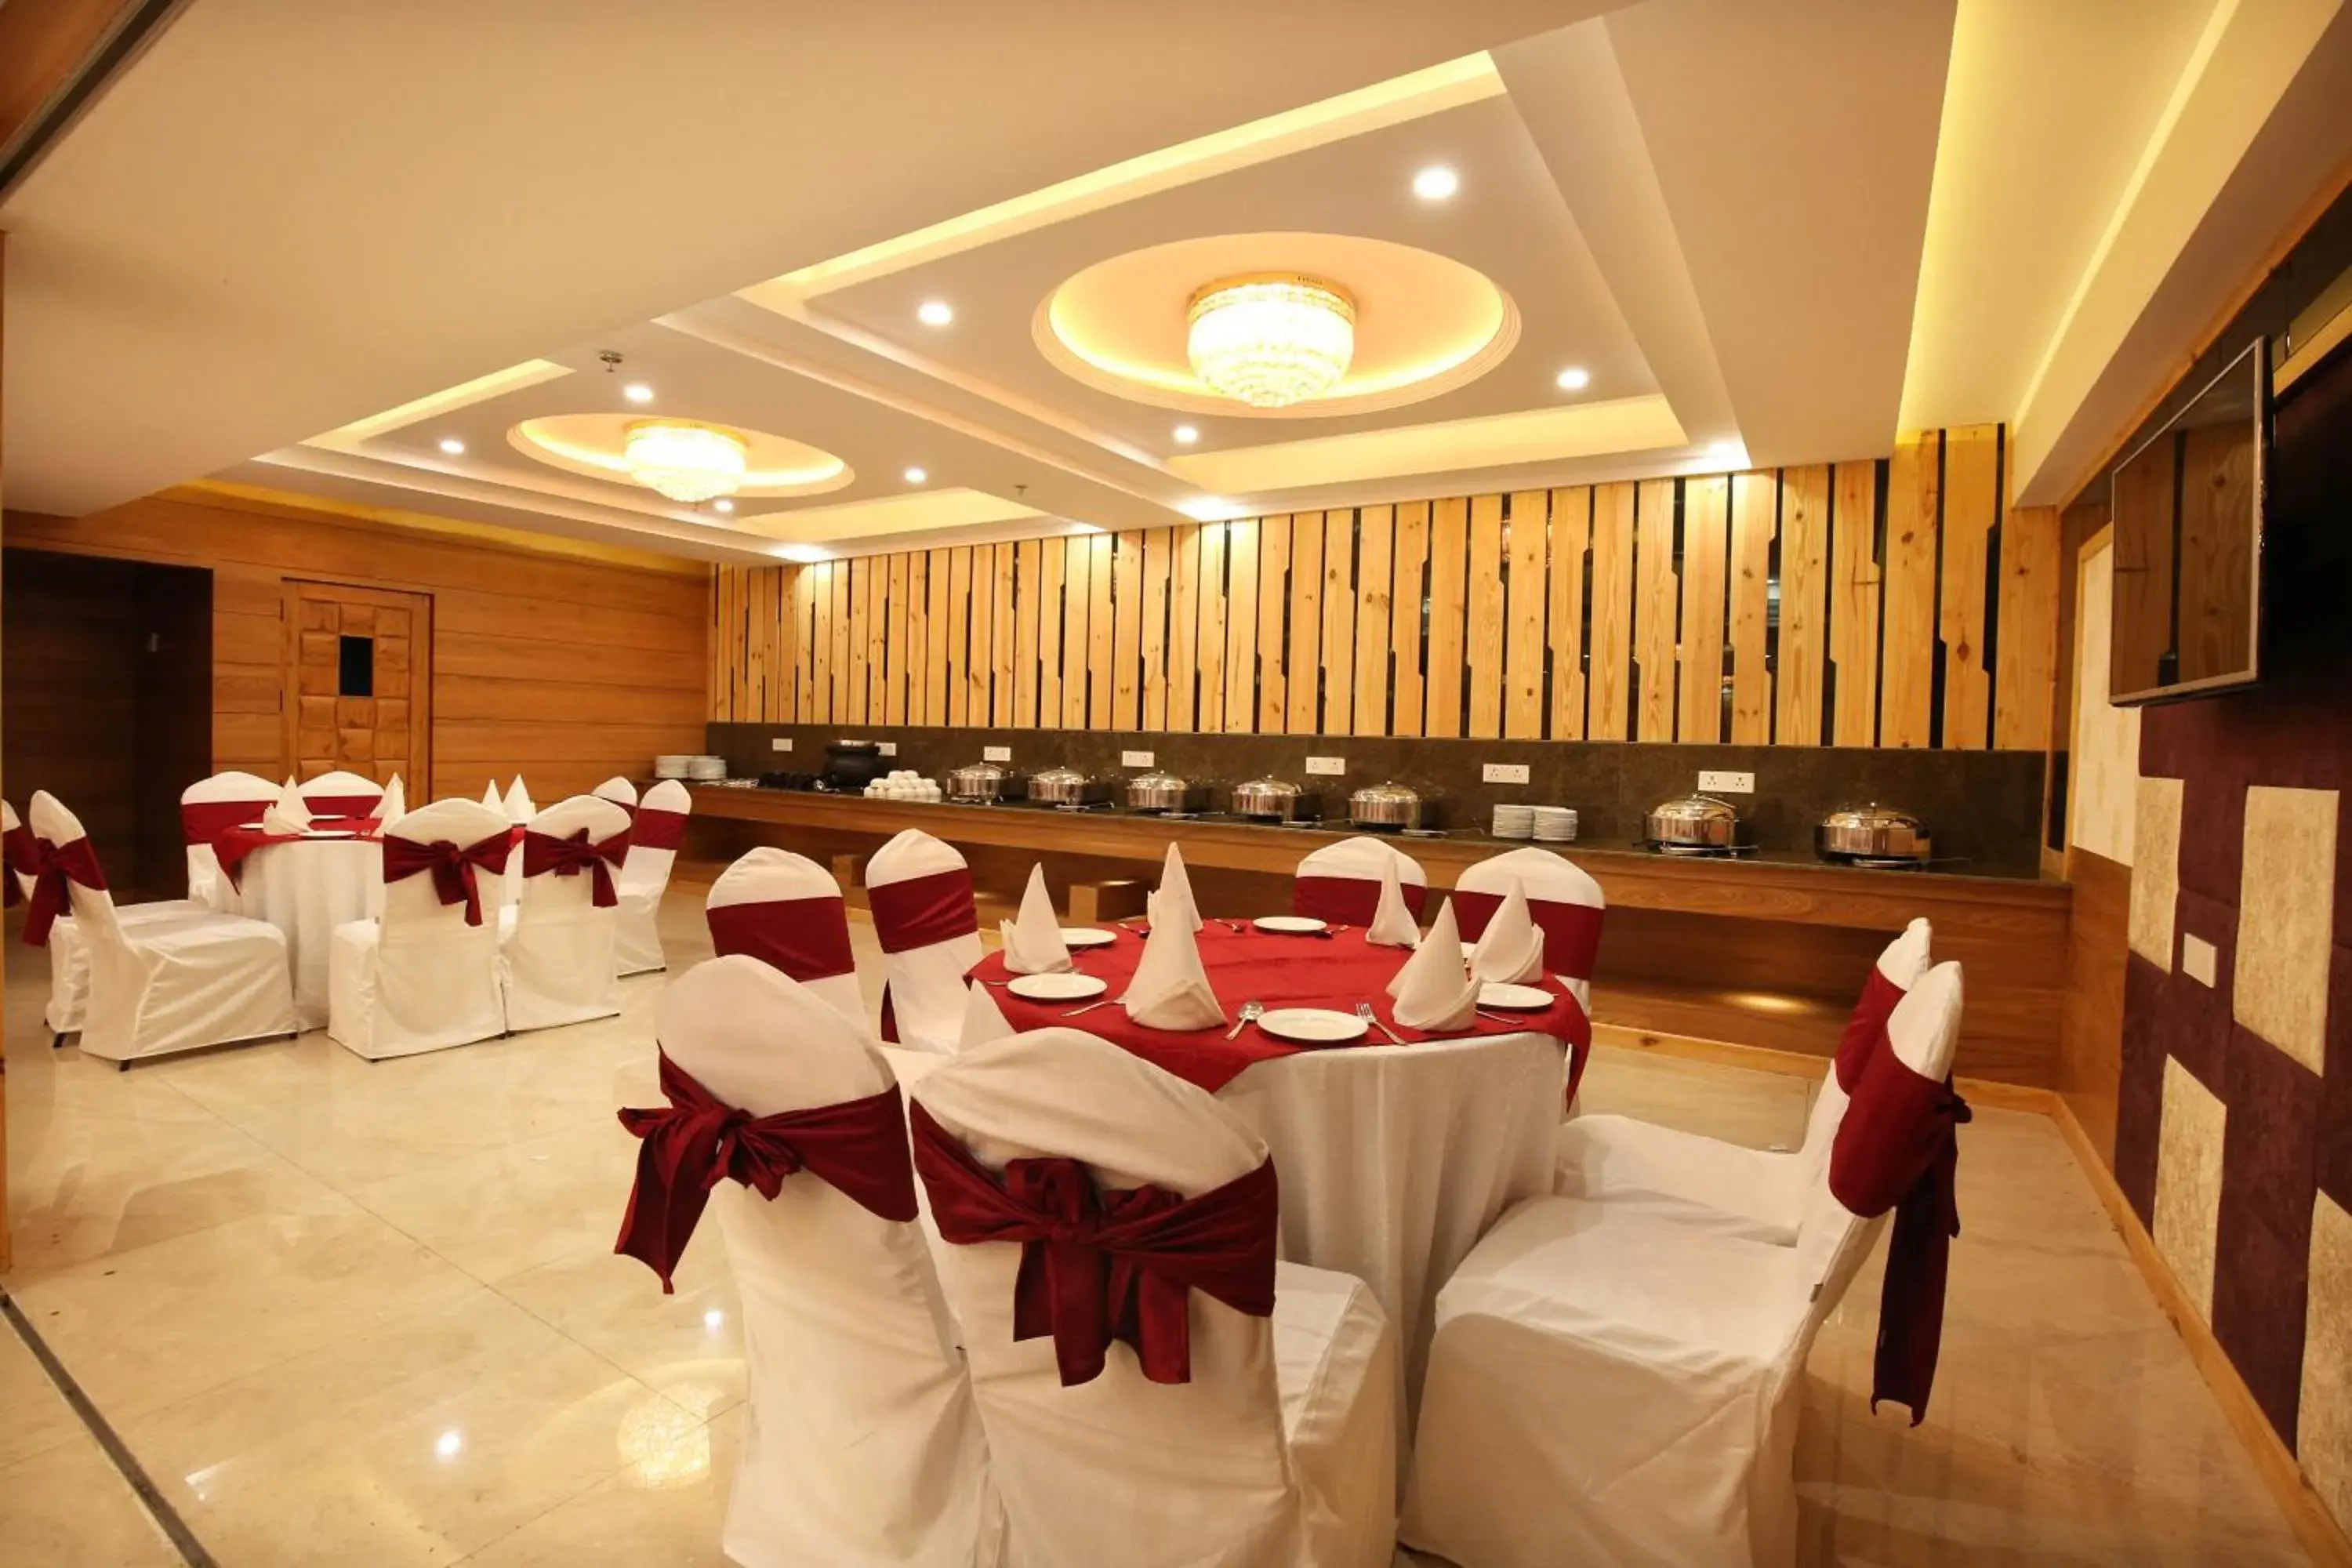 Banquet Facilities in Mint Hotel Premia Chandigarh, Zirakpur